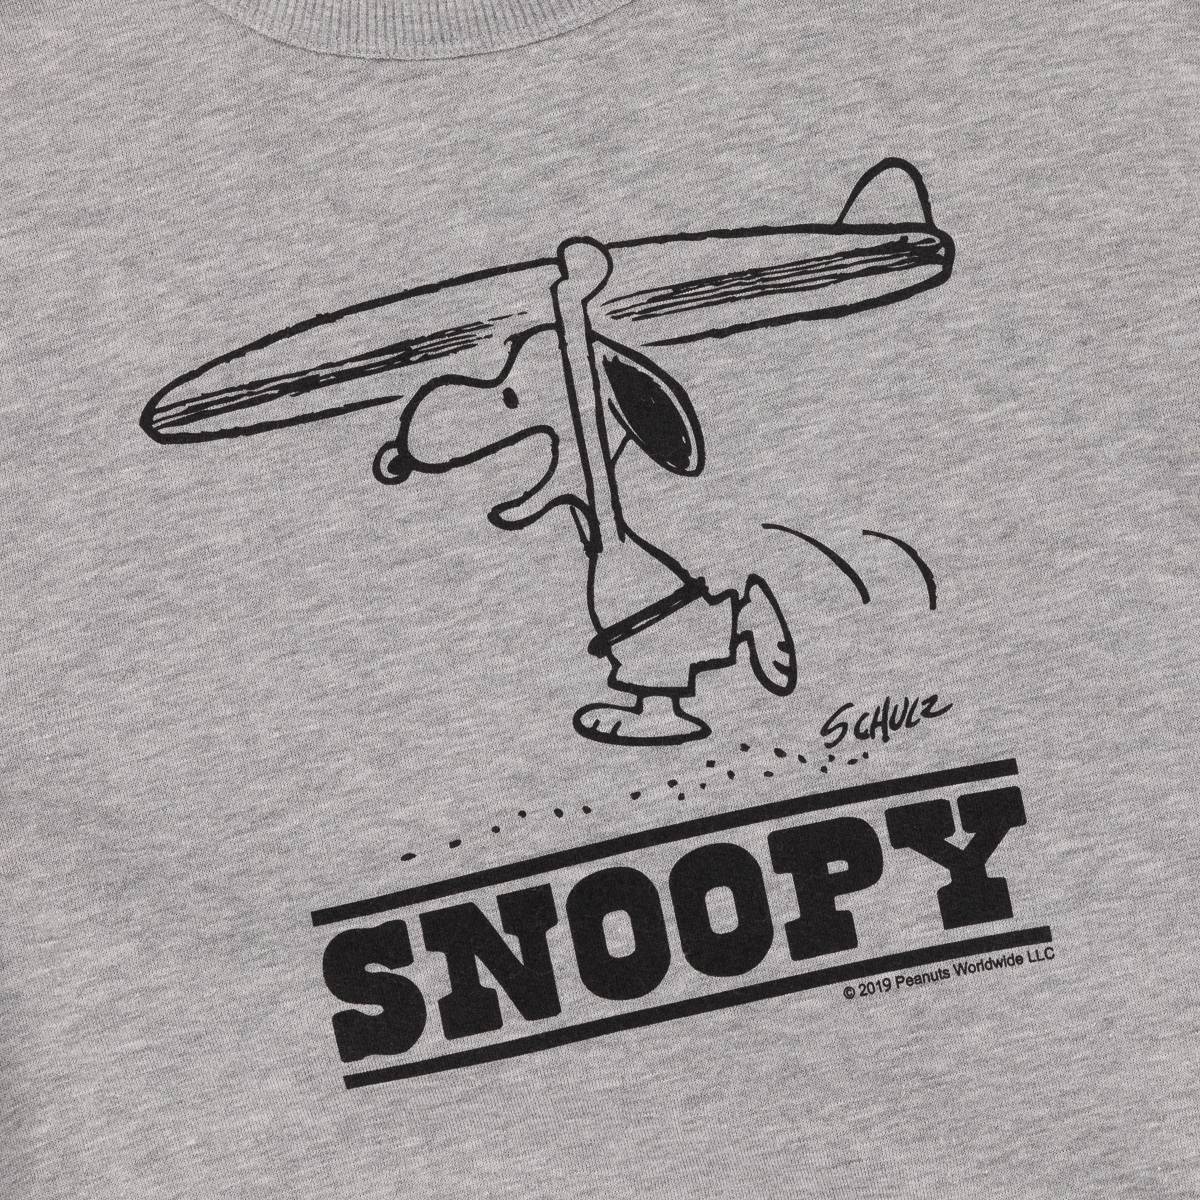 Snoopy Surf's Up Sweatshirt